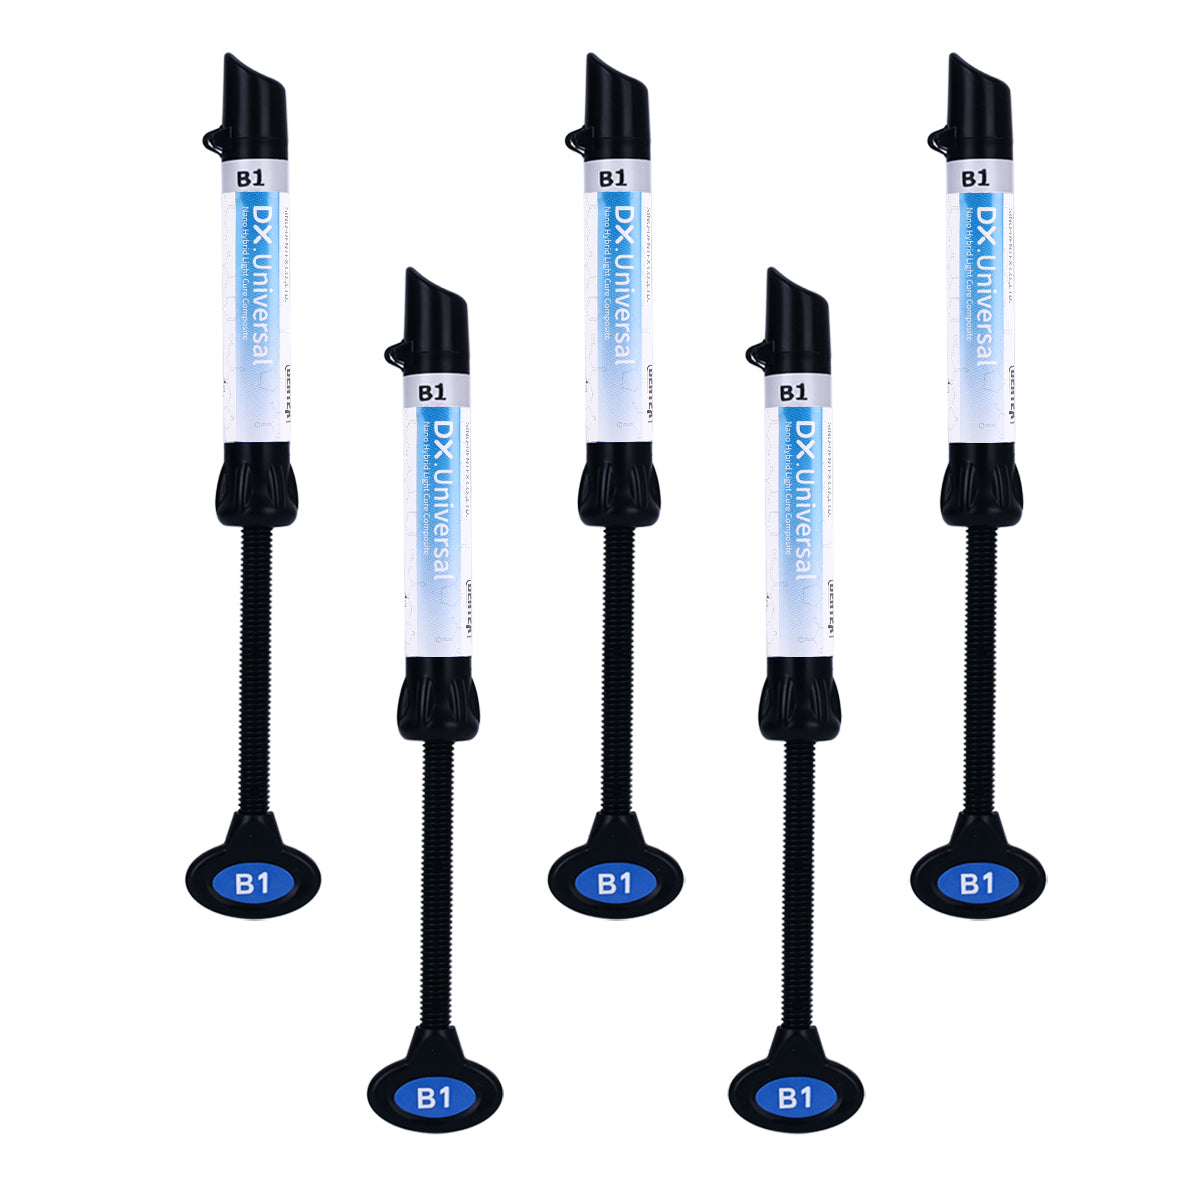 Dental Universal Nano Hybrid Light Cure Composite Resin A1/A2/A3/A3.5/B1/B2 4g Syringe - azdentall.com